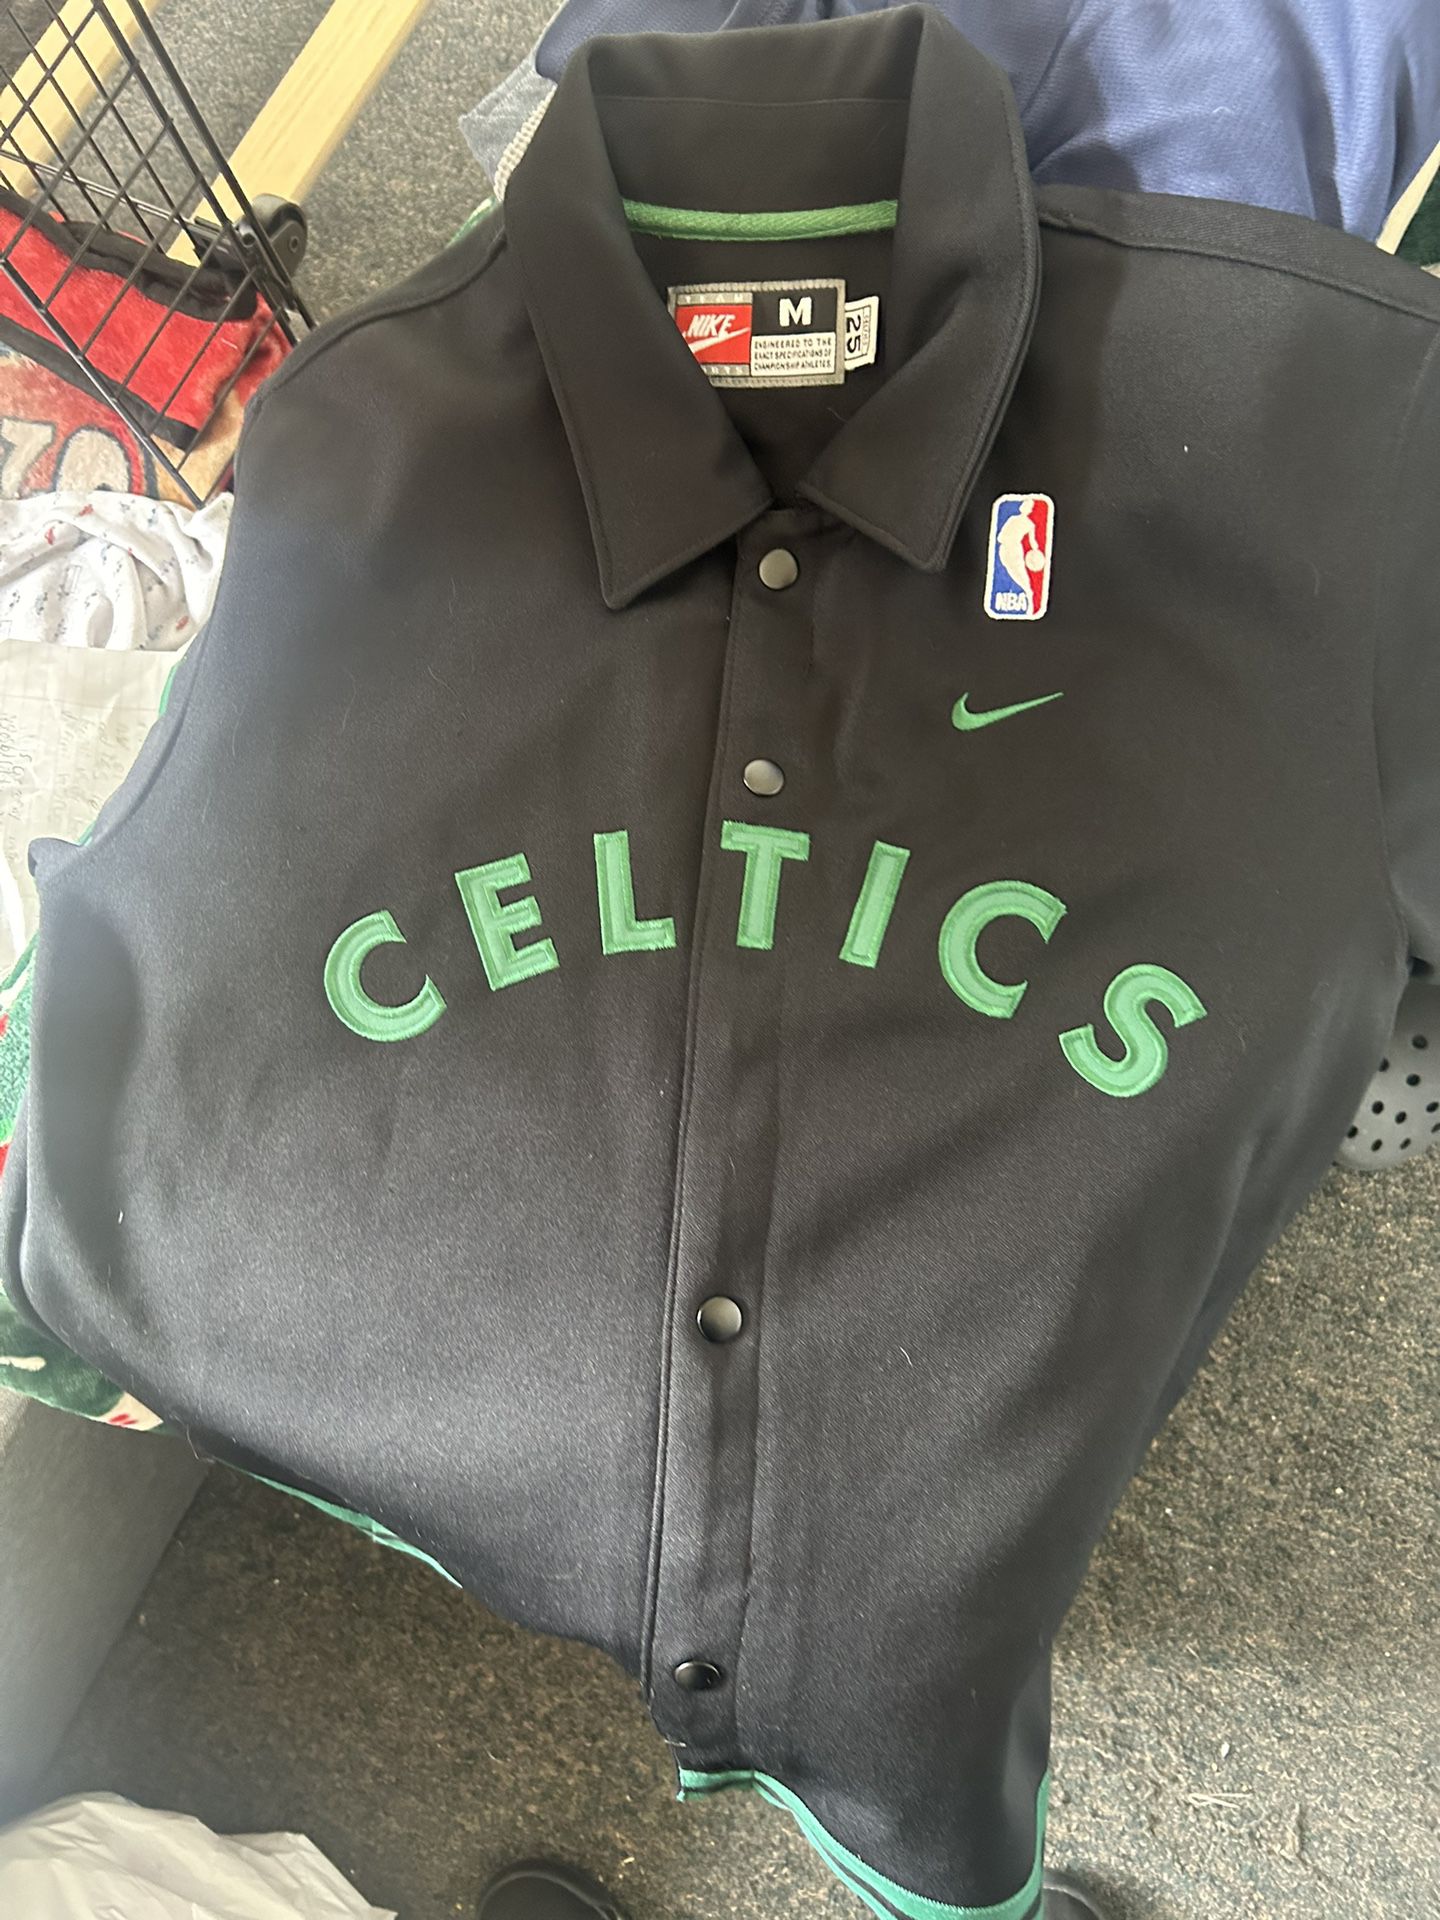 Celtics jersey 